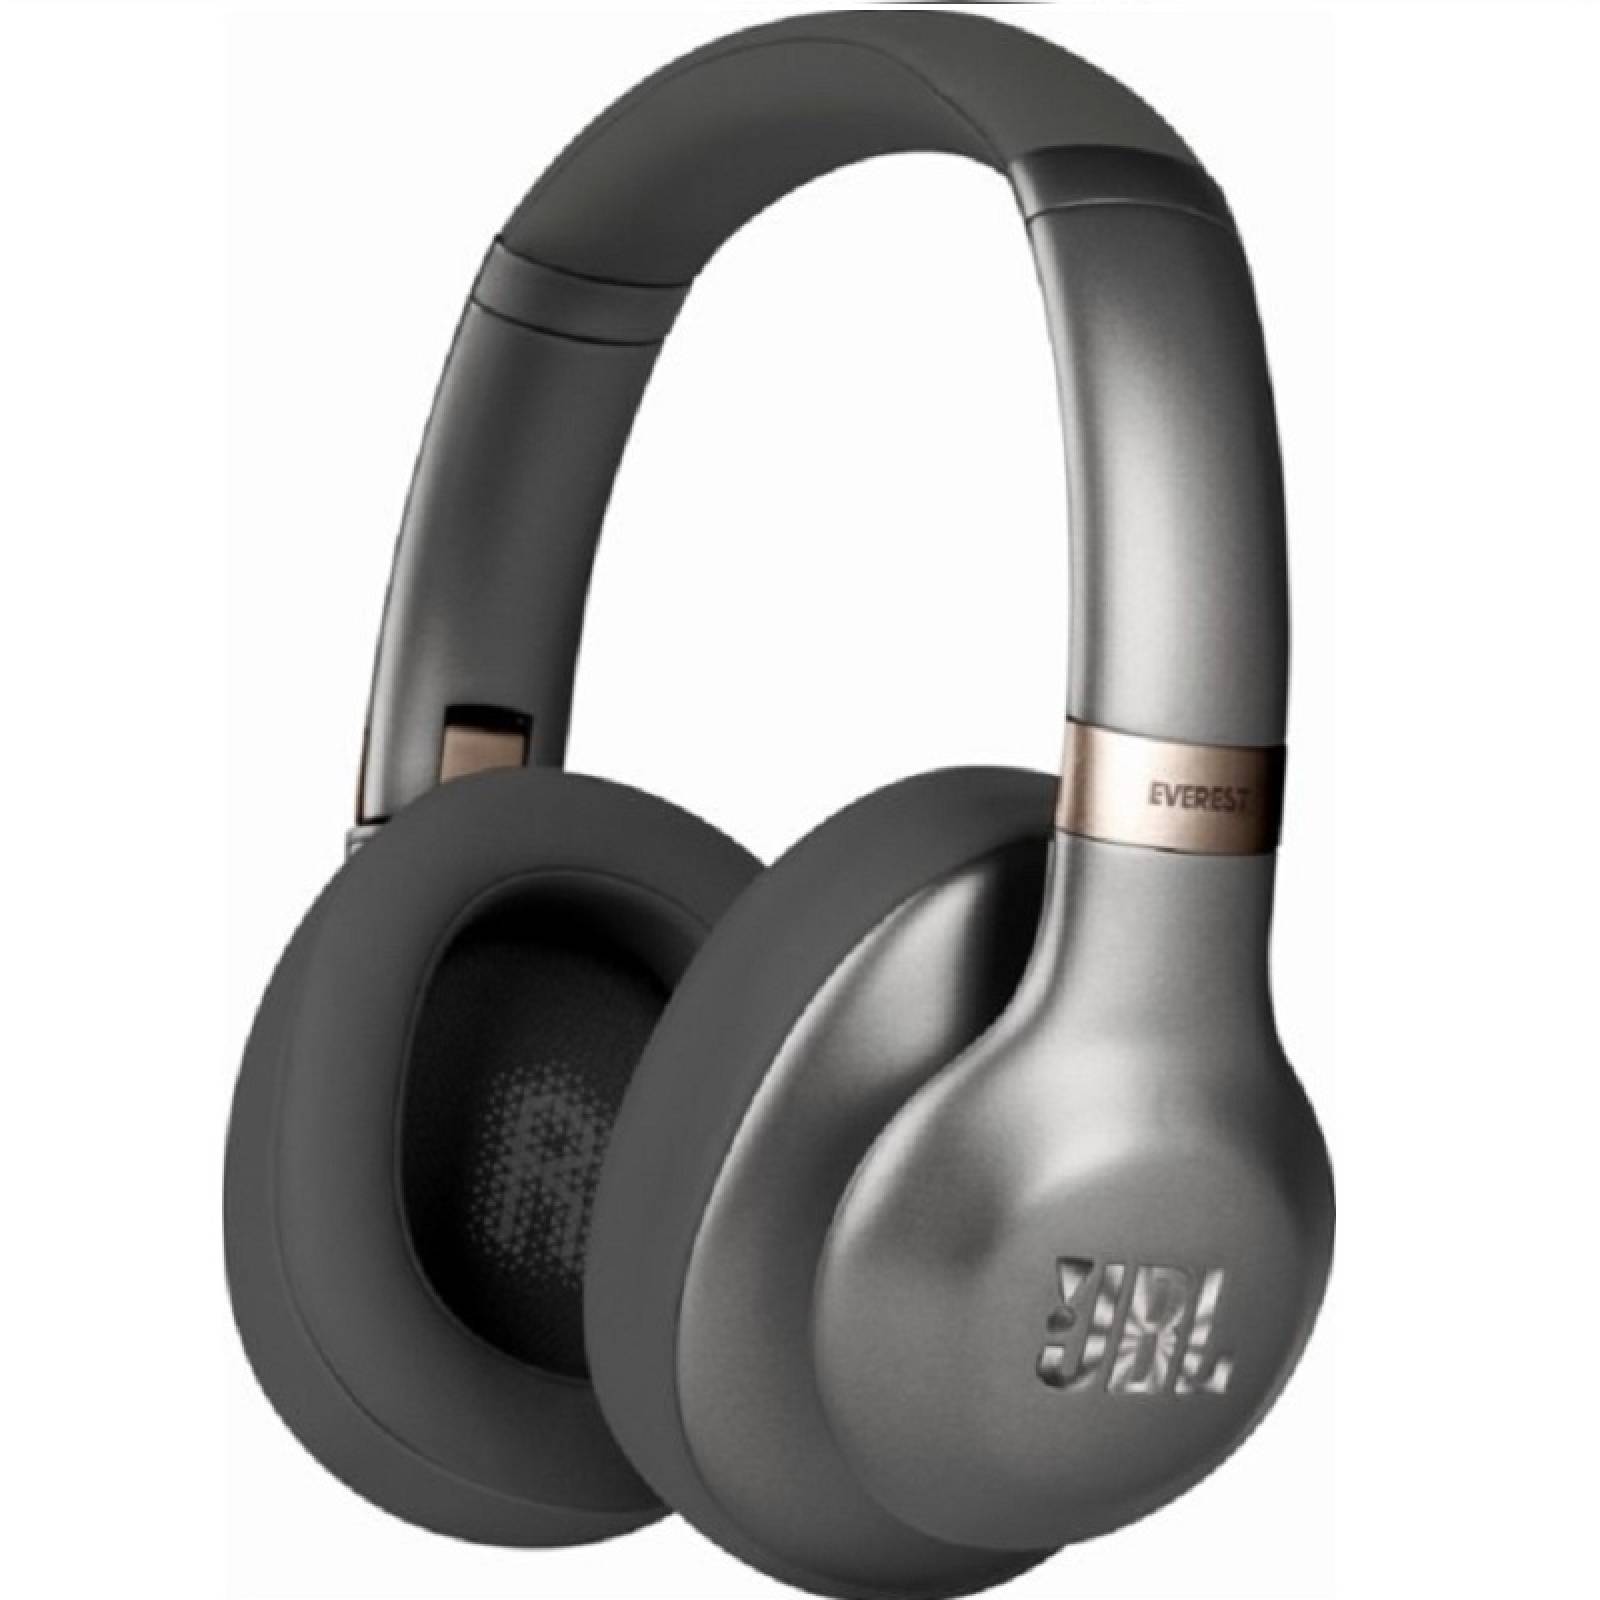 Audifonos Bluetooth Jbl Everest 710 Pro Audio Sound -Producto reacondicionado-